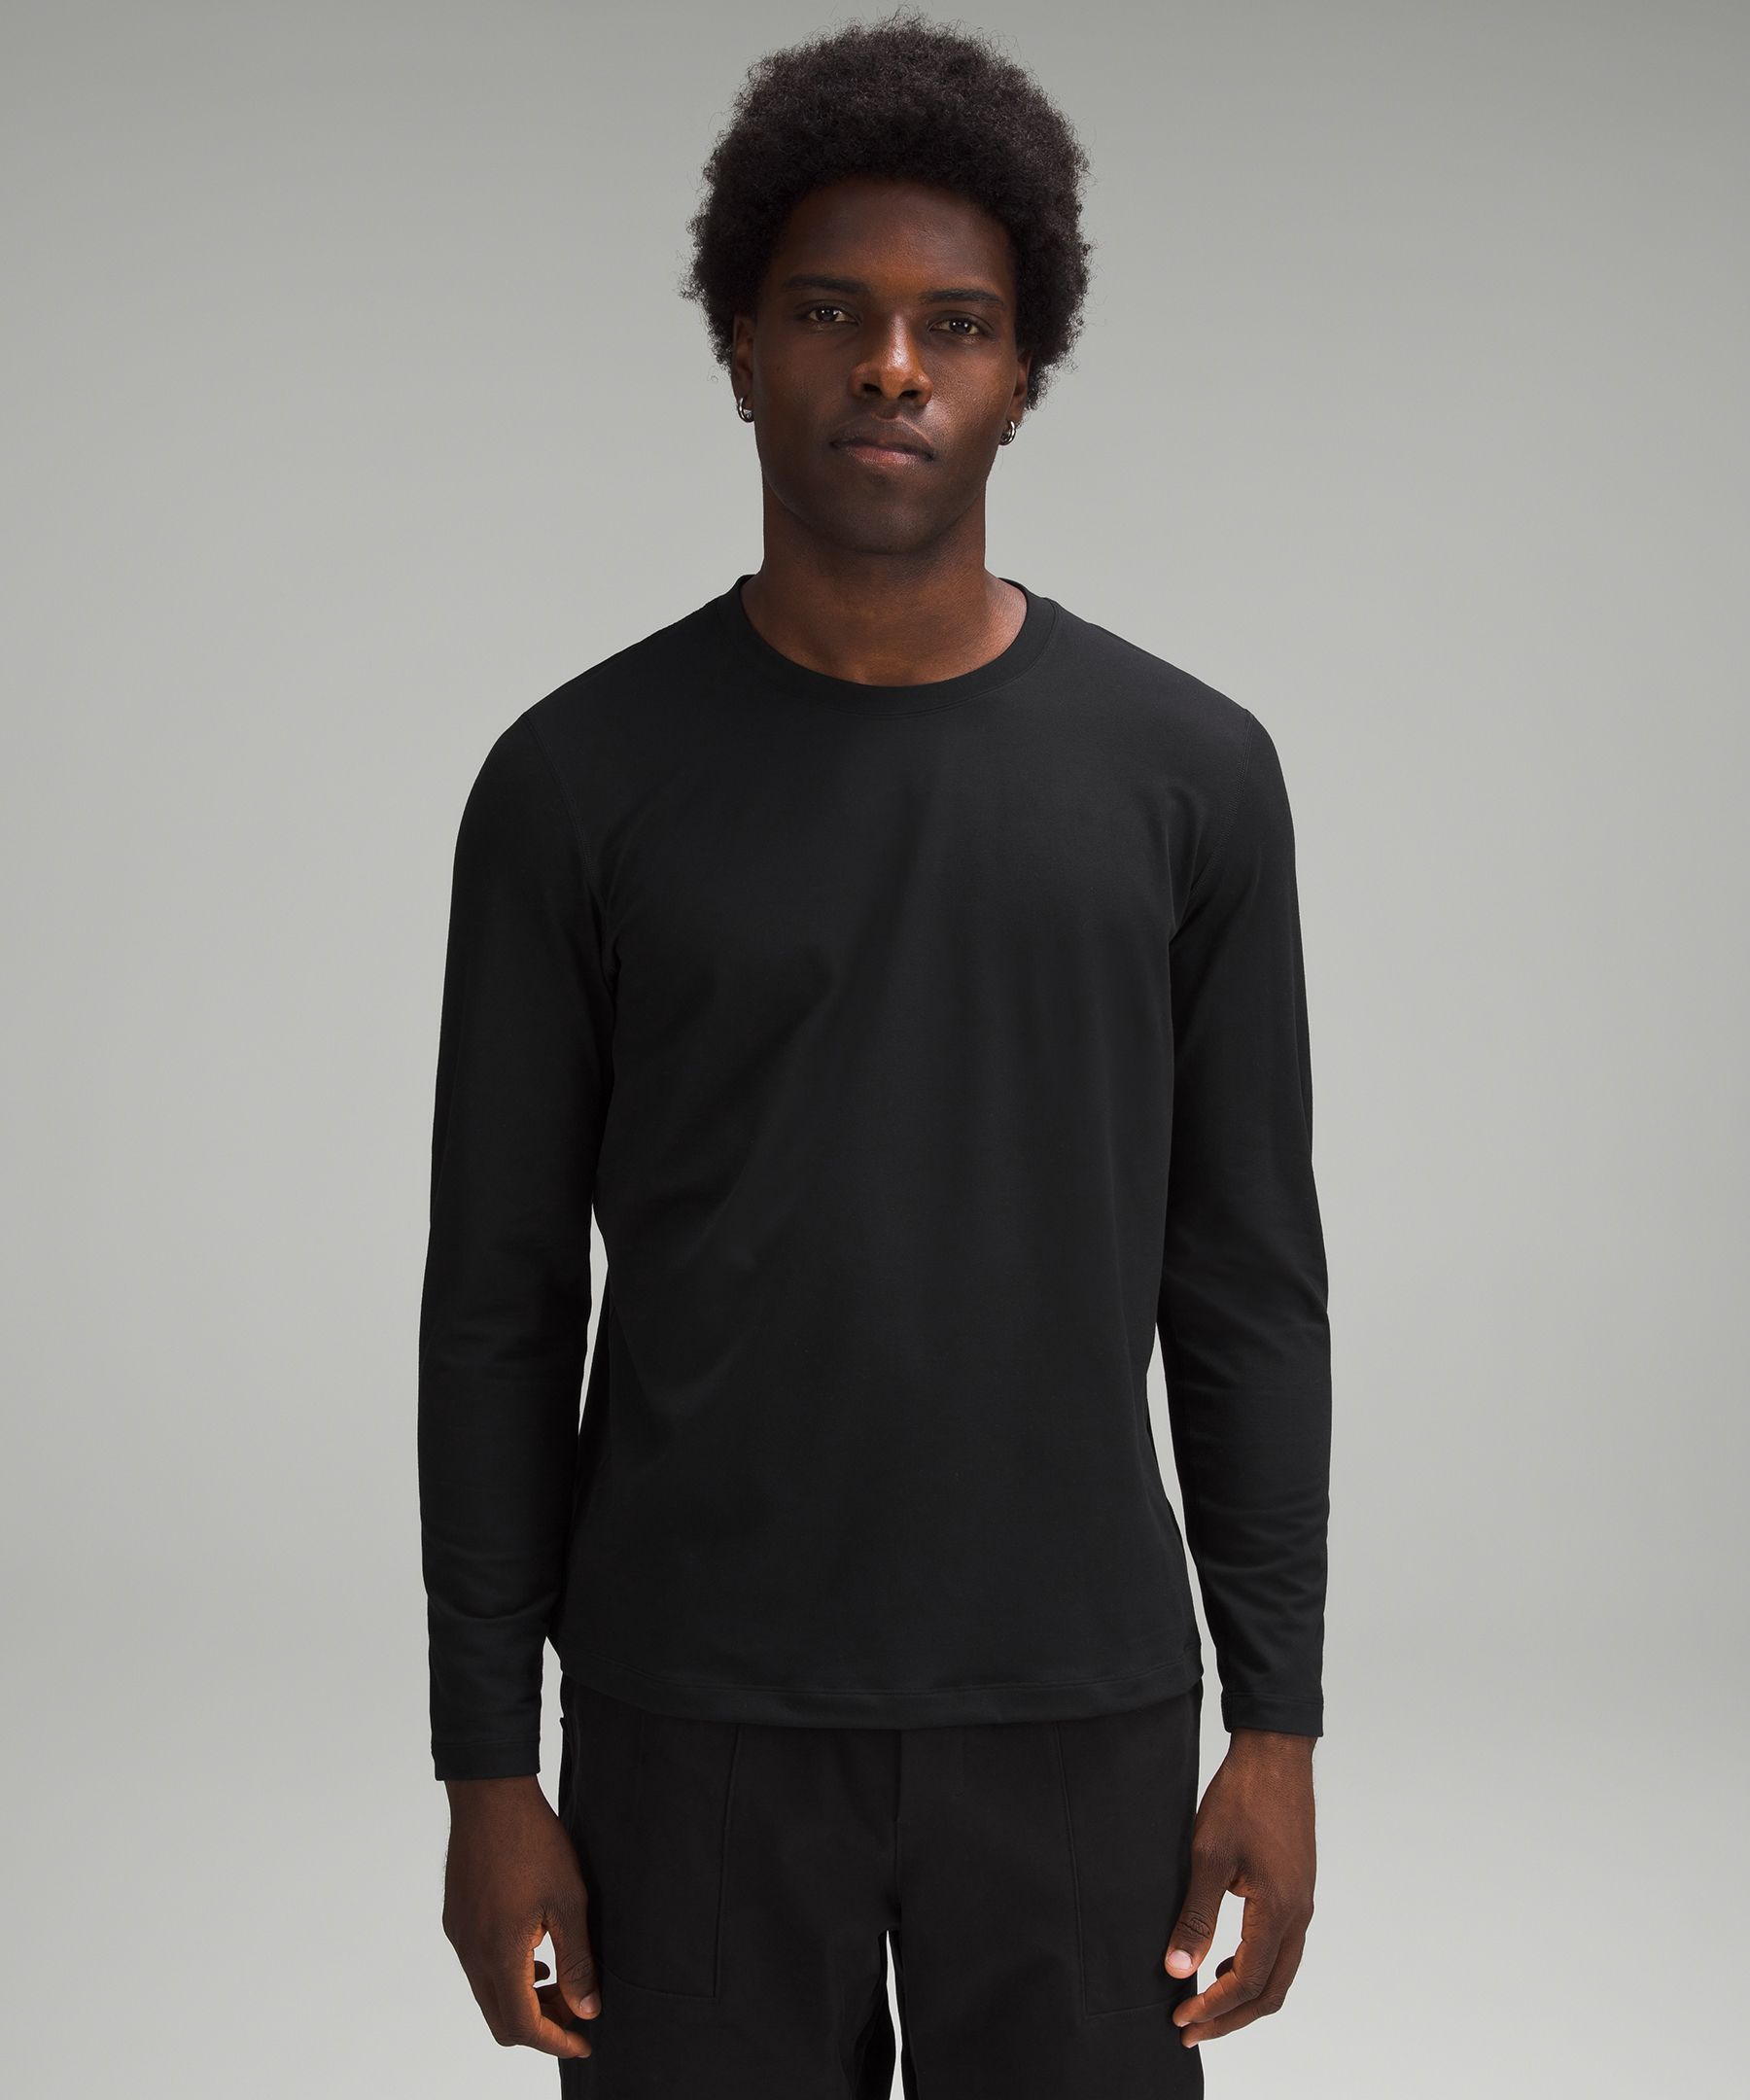 Lululemon Mens Long Sleeve Tops Outlet Shop - Black / Rhino Grey